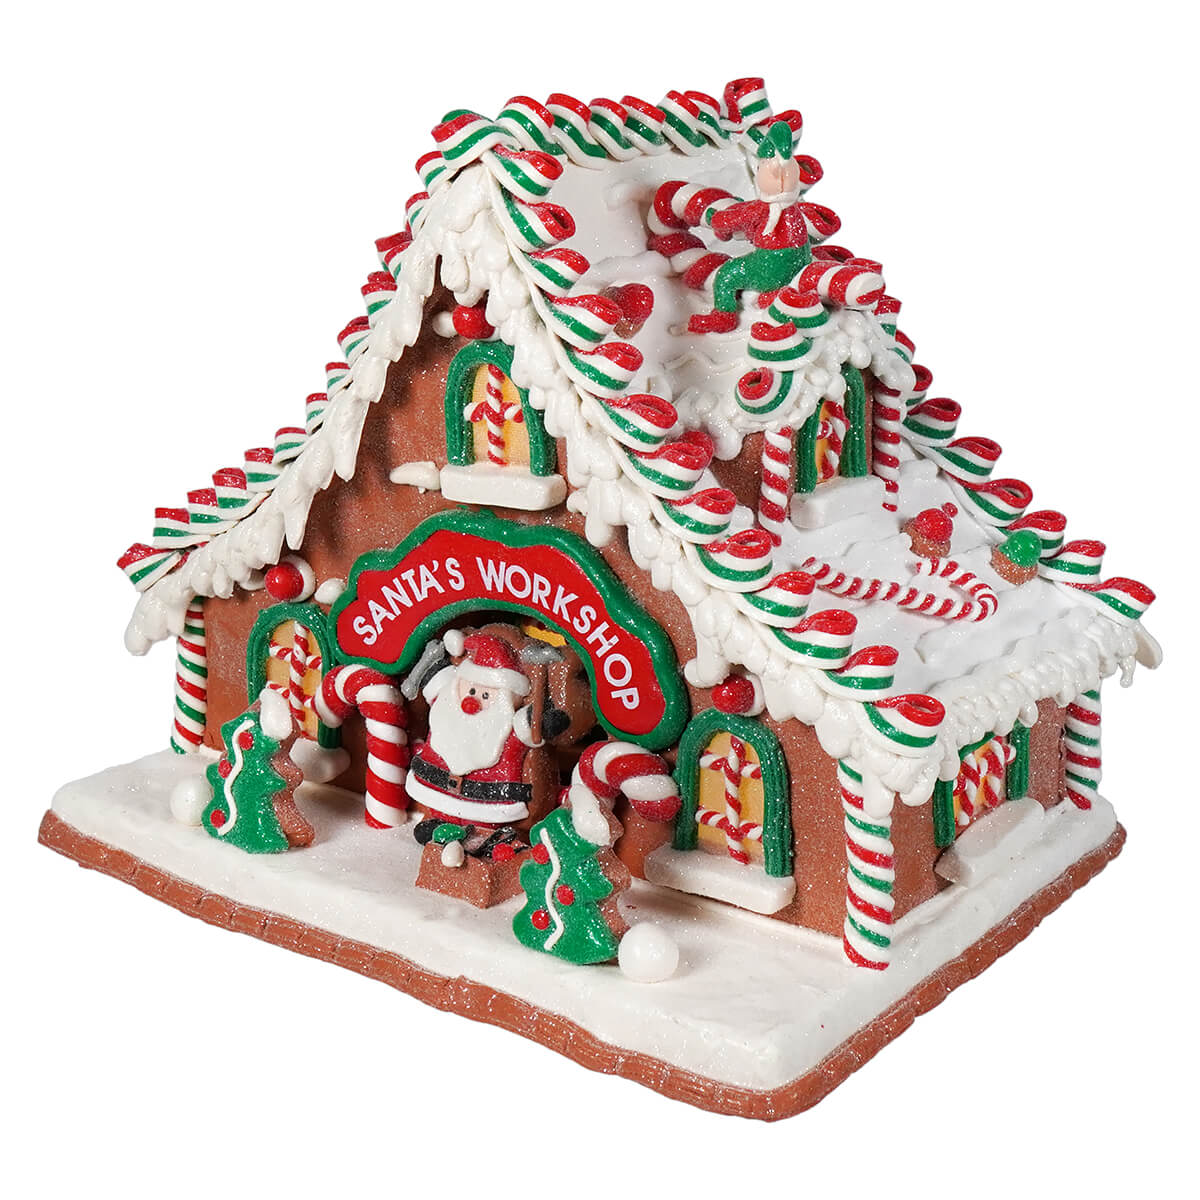 Lighted Santa's Workshop Claydough Gingerbread House